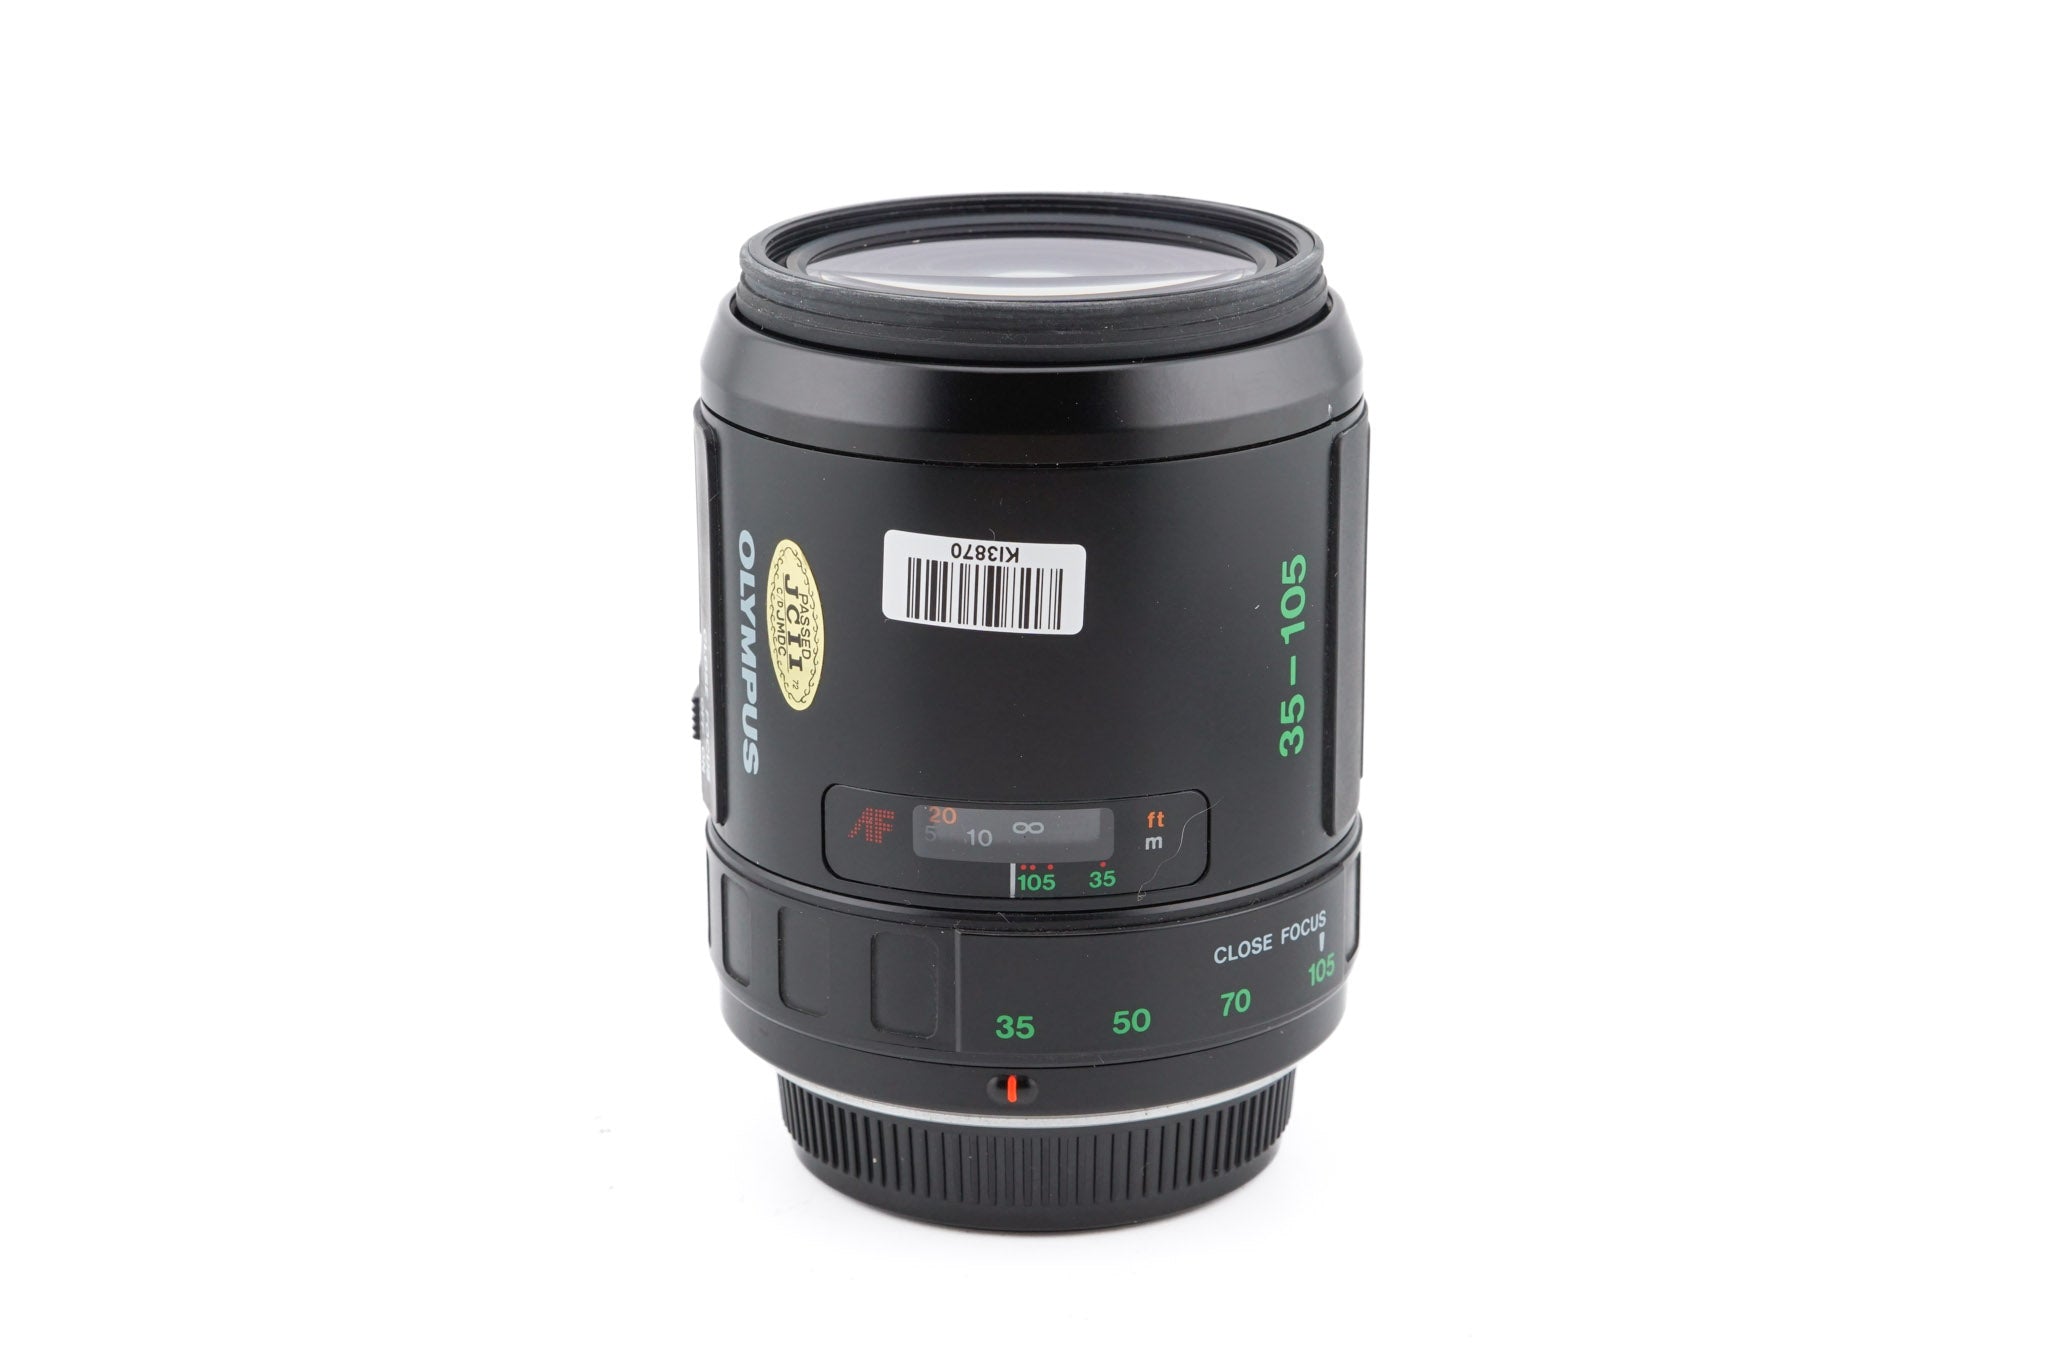 Olympus 35-105mm f3.5-4.5 AF Zoom - Lens